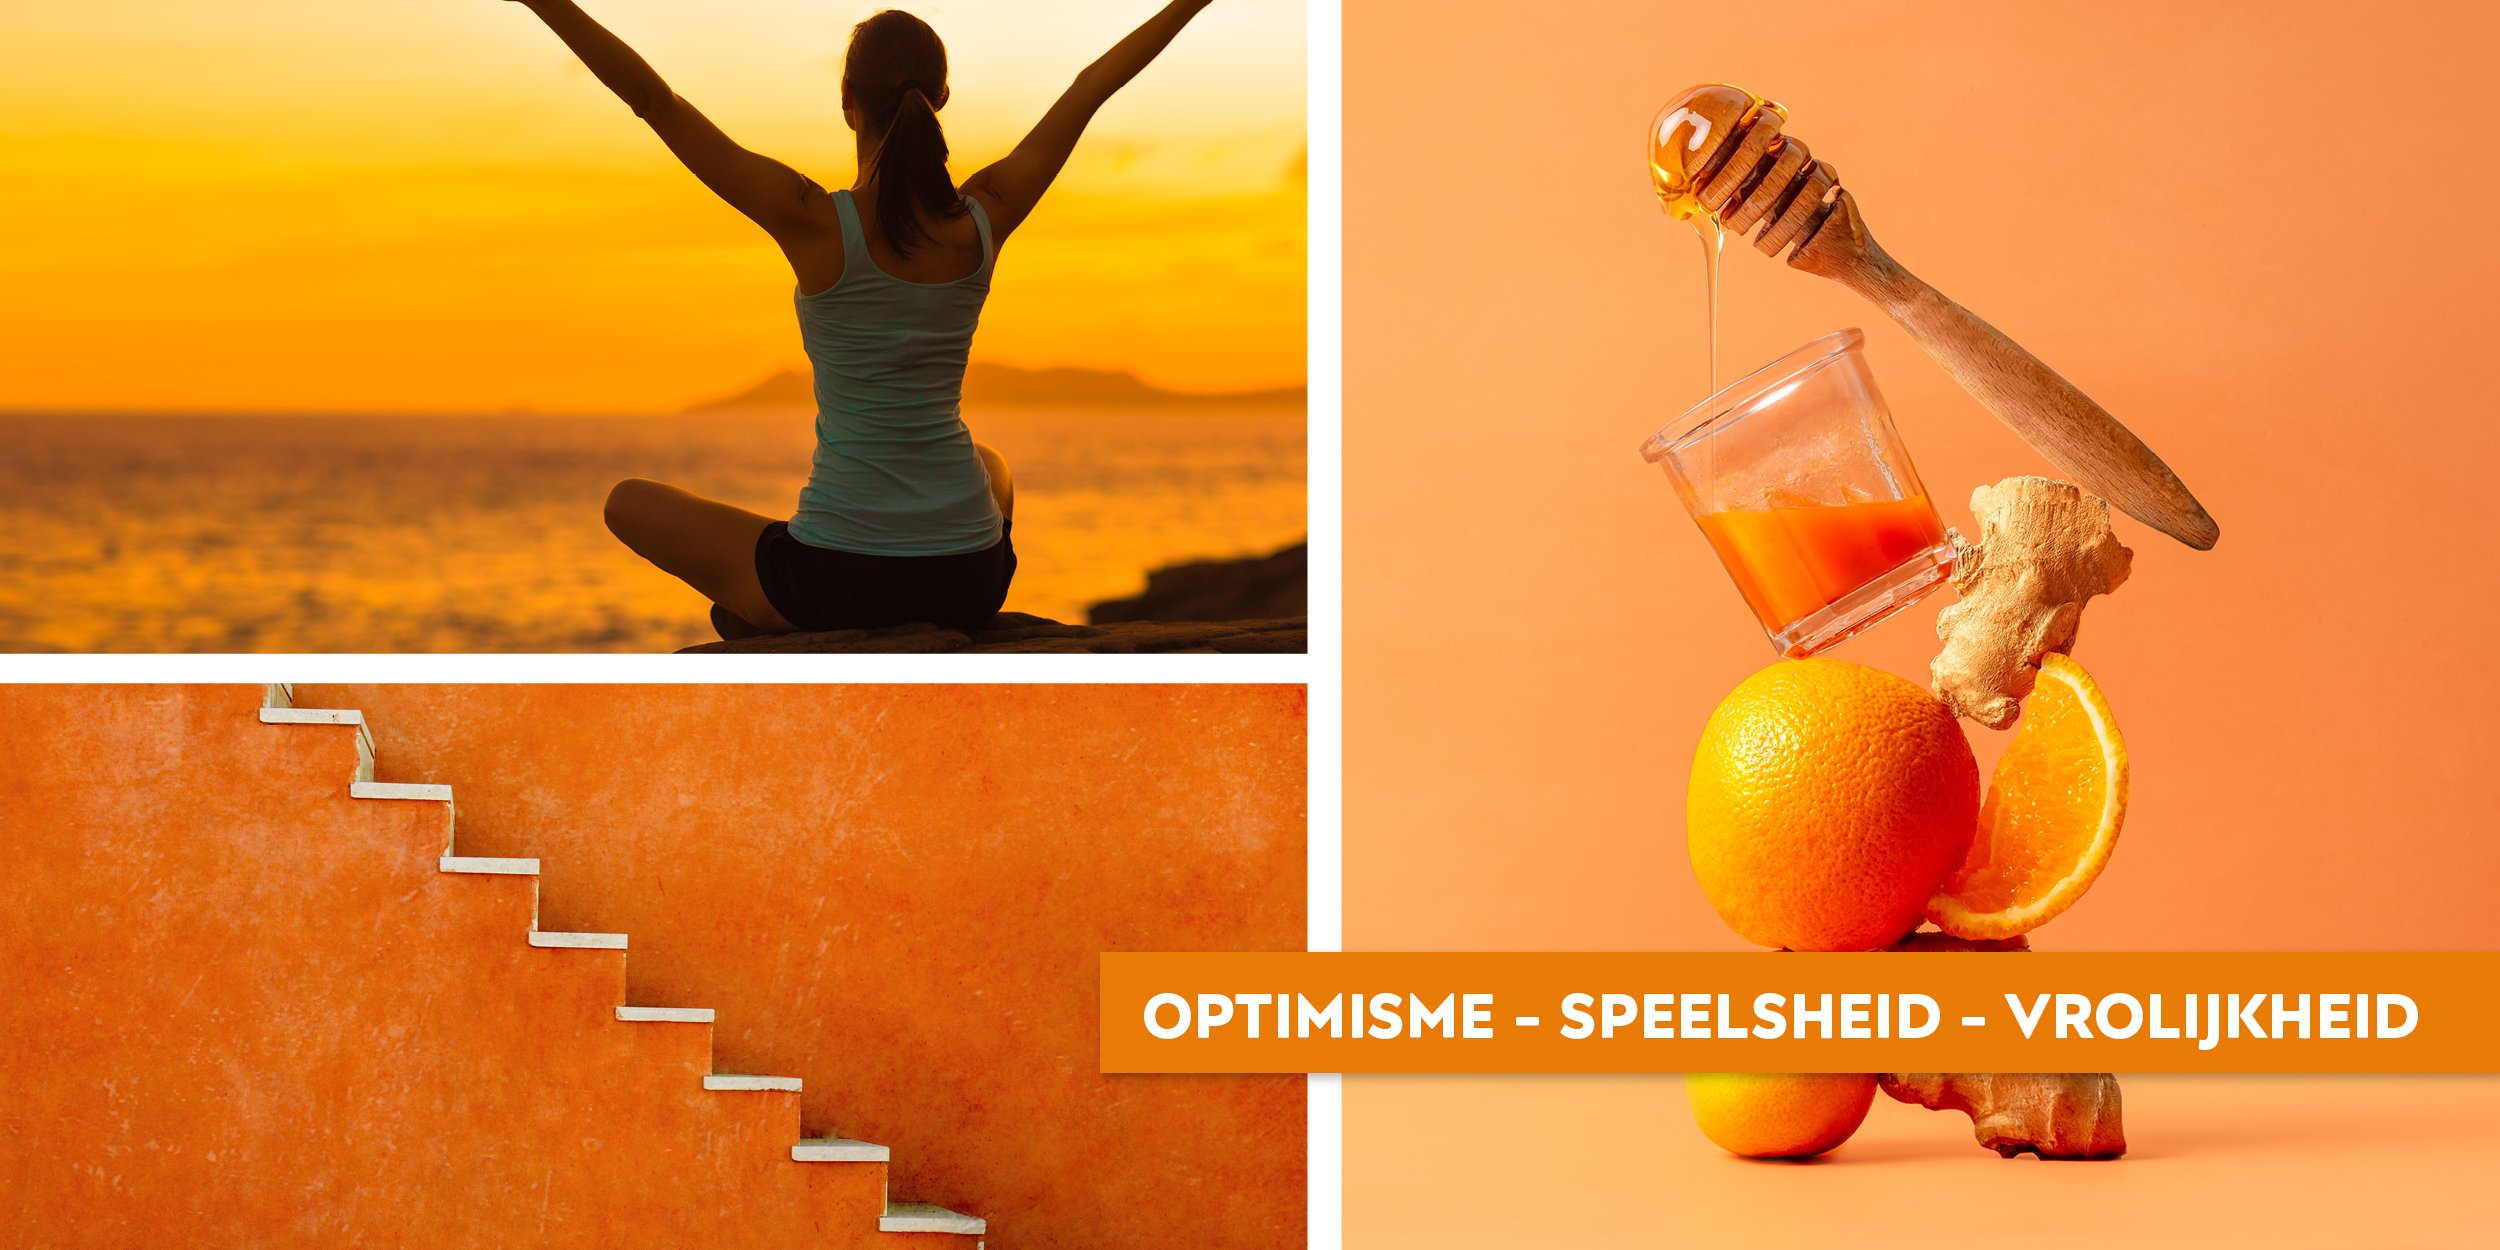 Oranje = Optimisme - Speelsheid - Vrolijkheid